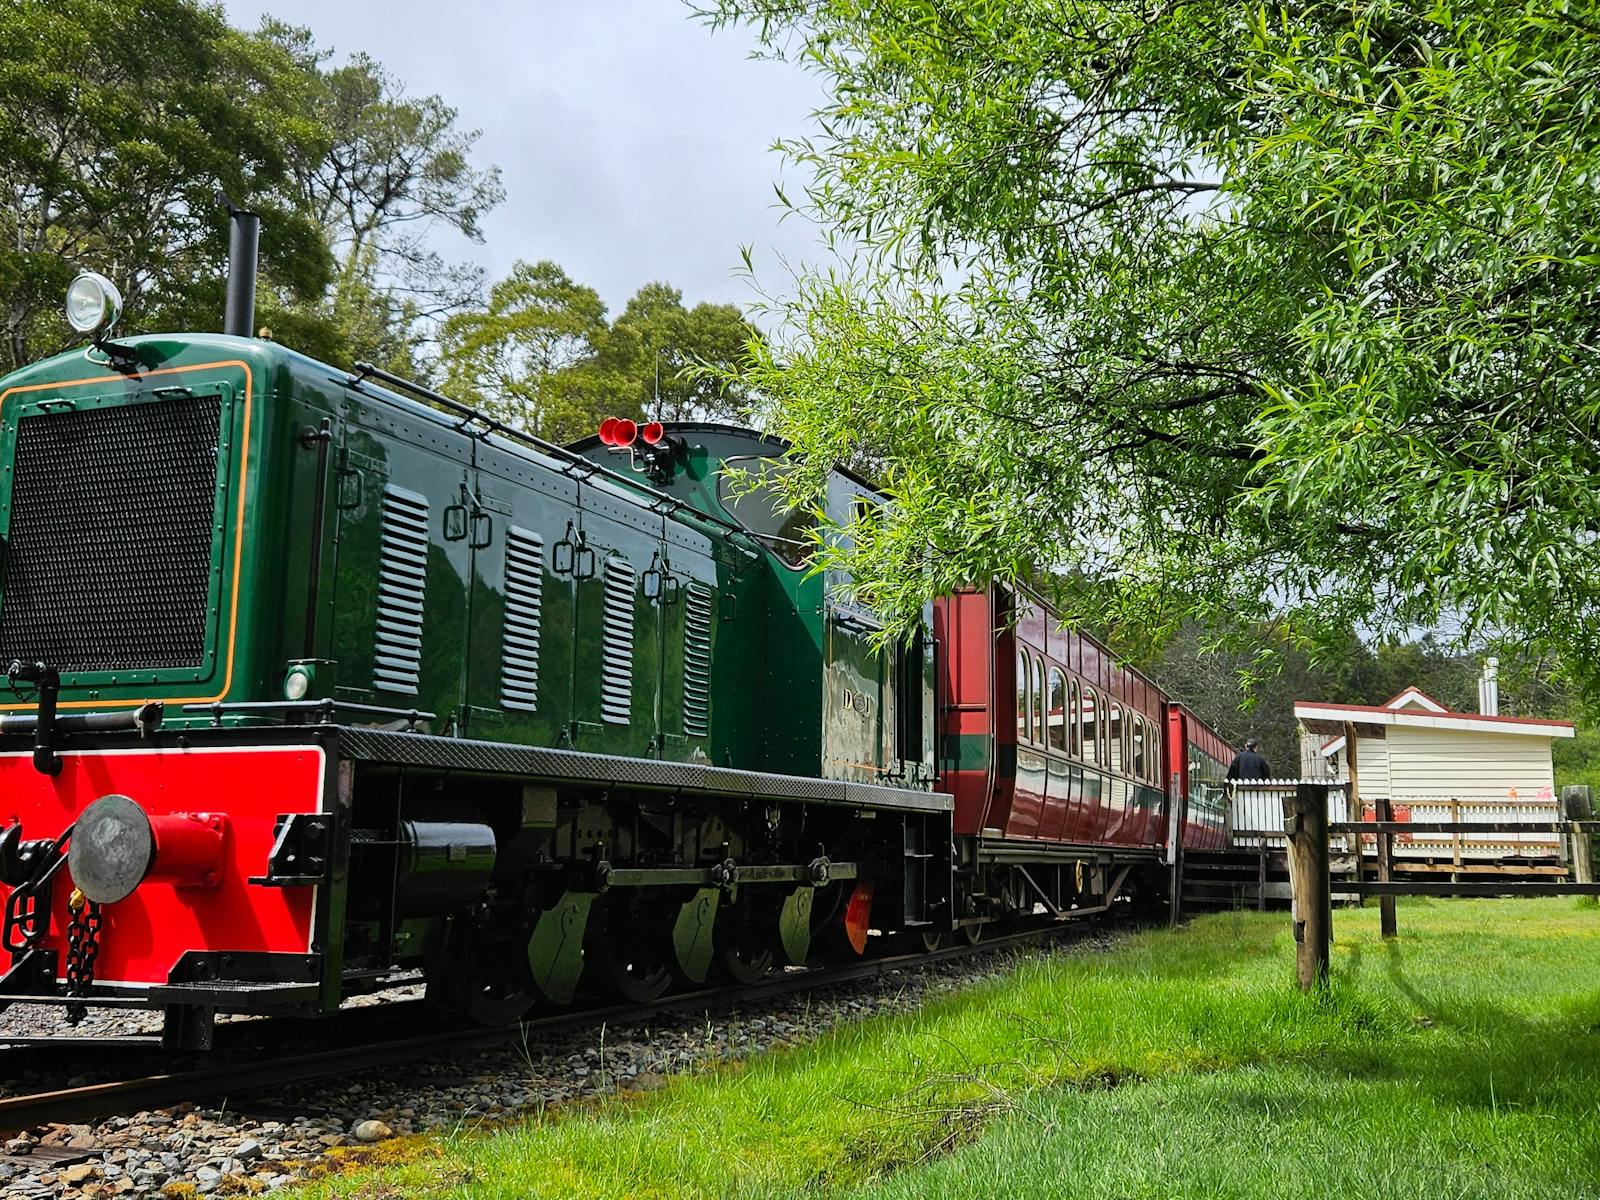 A heritage diesel locomotive sits at a remote bush station